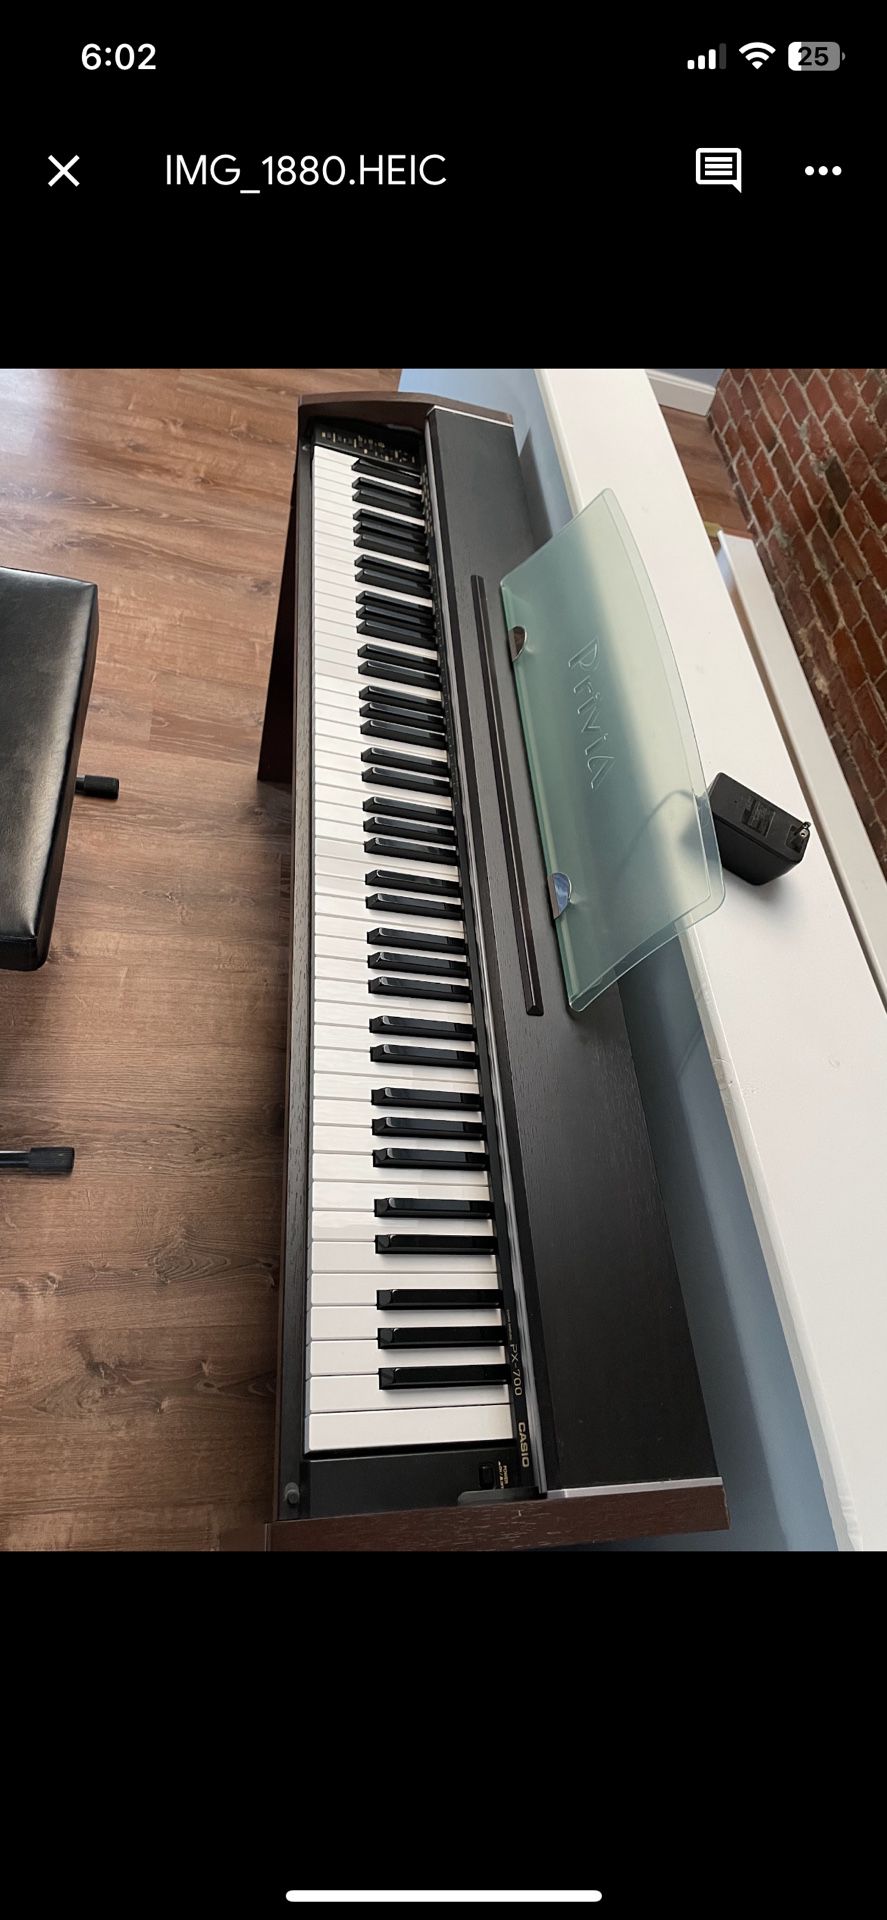 Casio Privia PX700 Digital Piano 88 keys